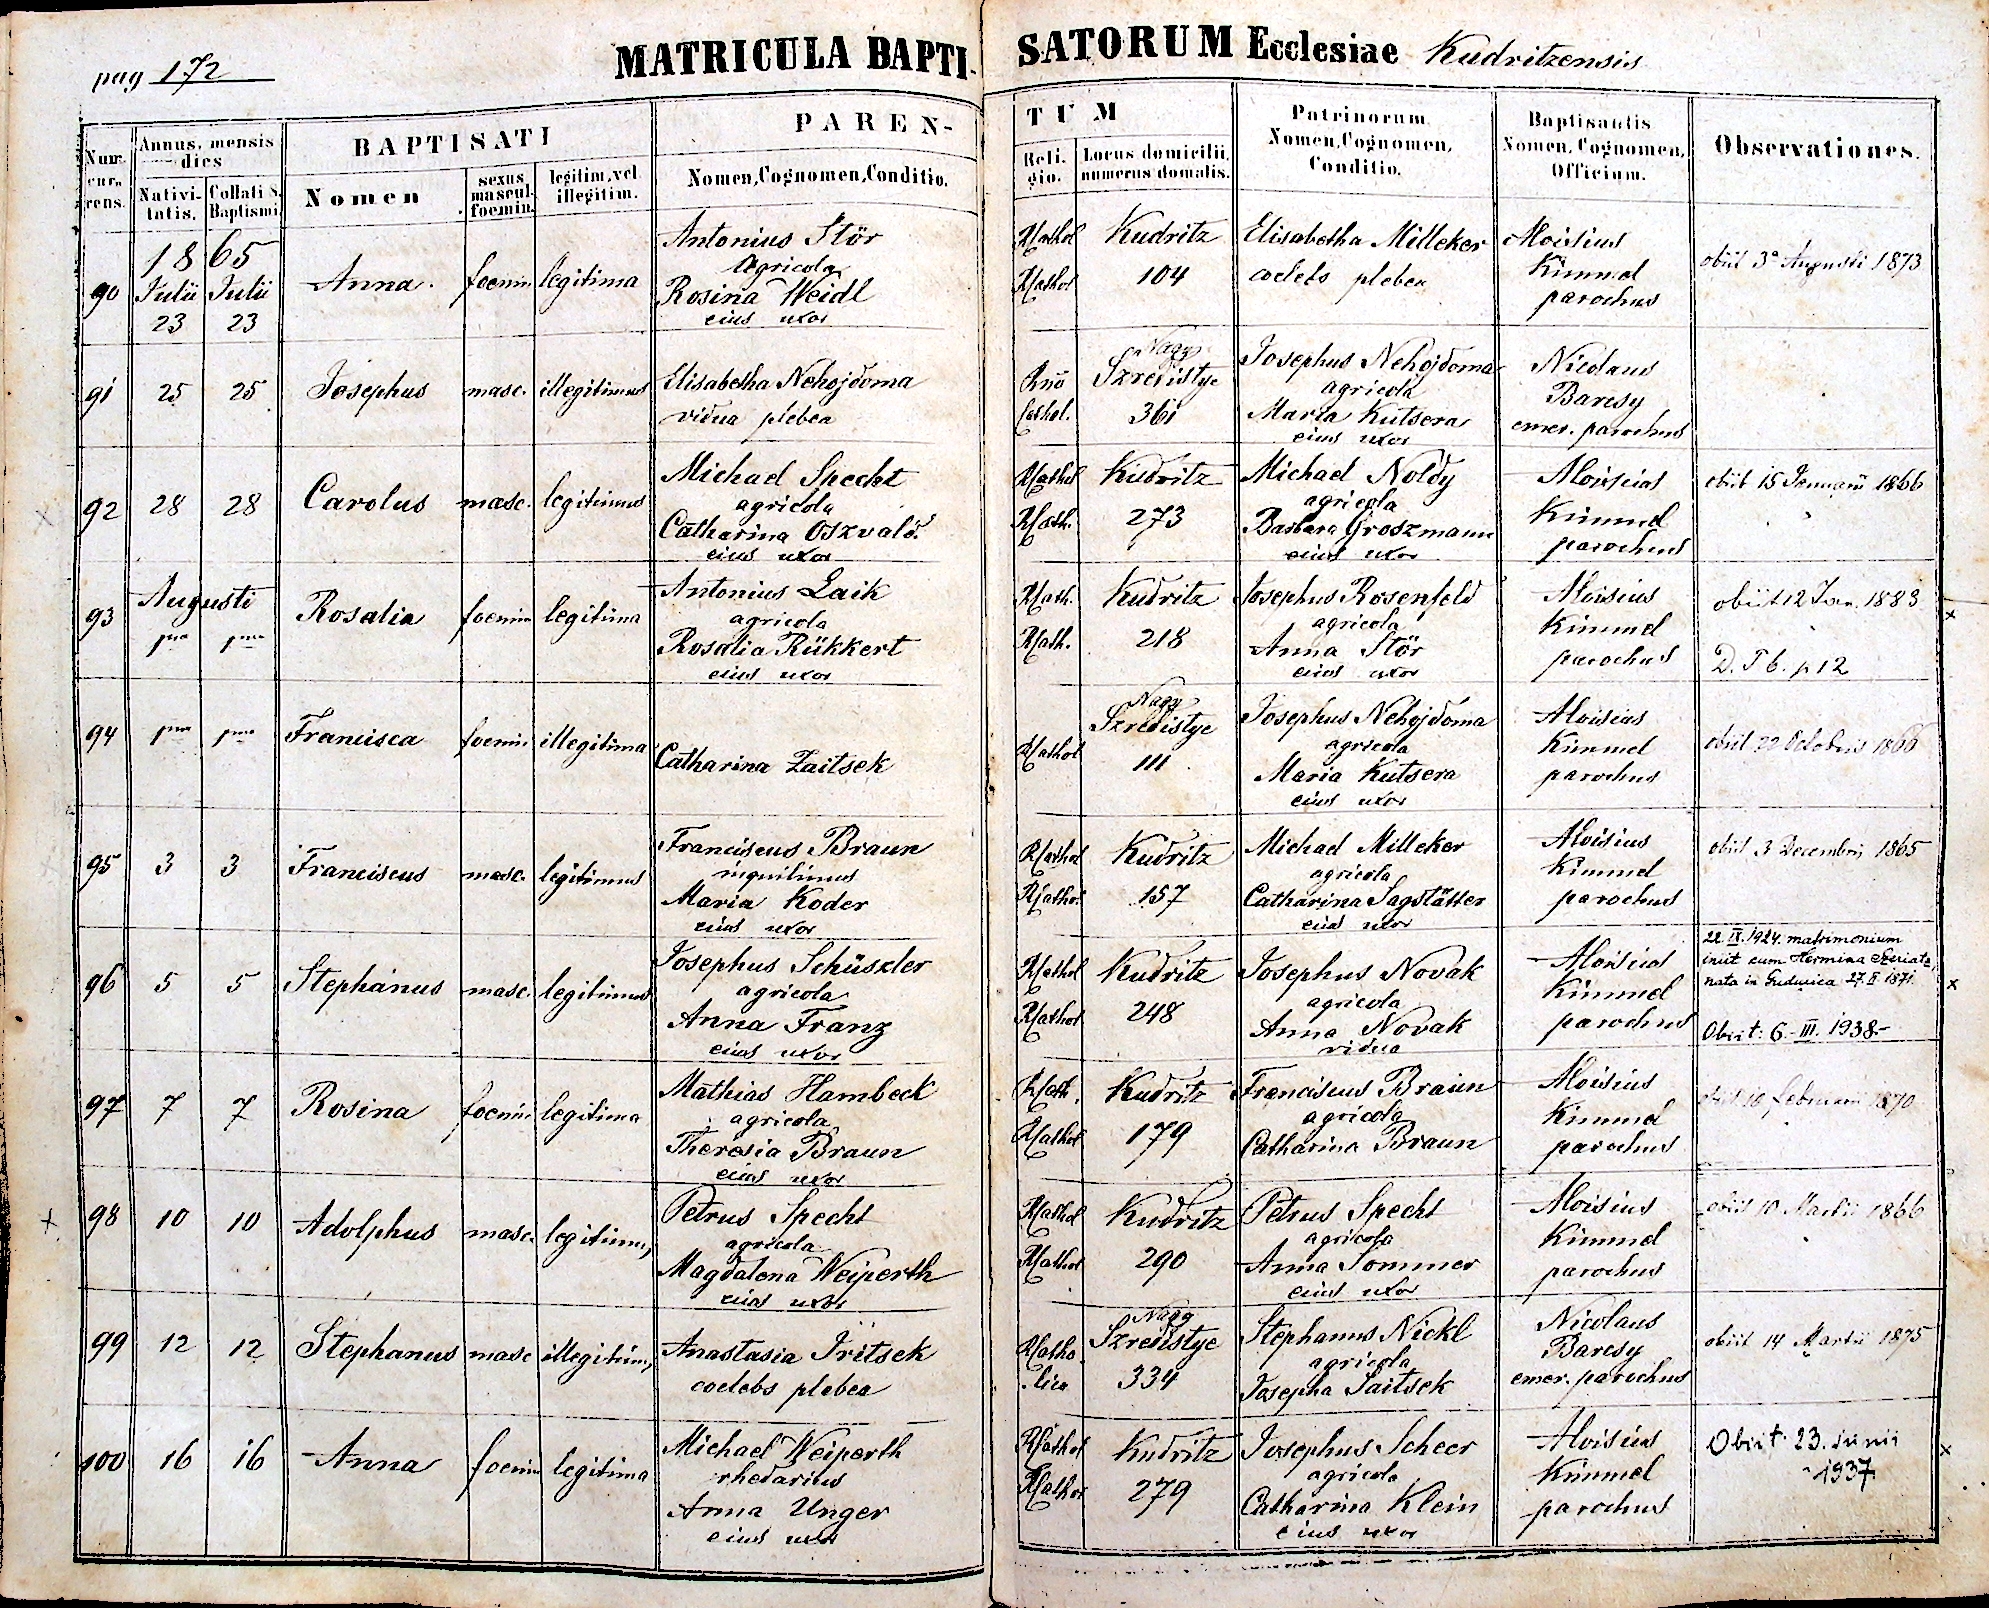 images/church_records/BIRTHS/1852-1870B/172